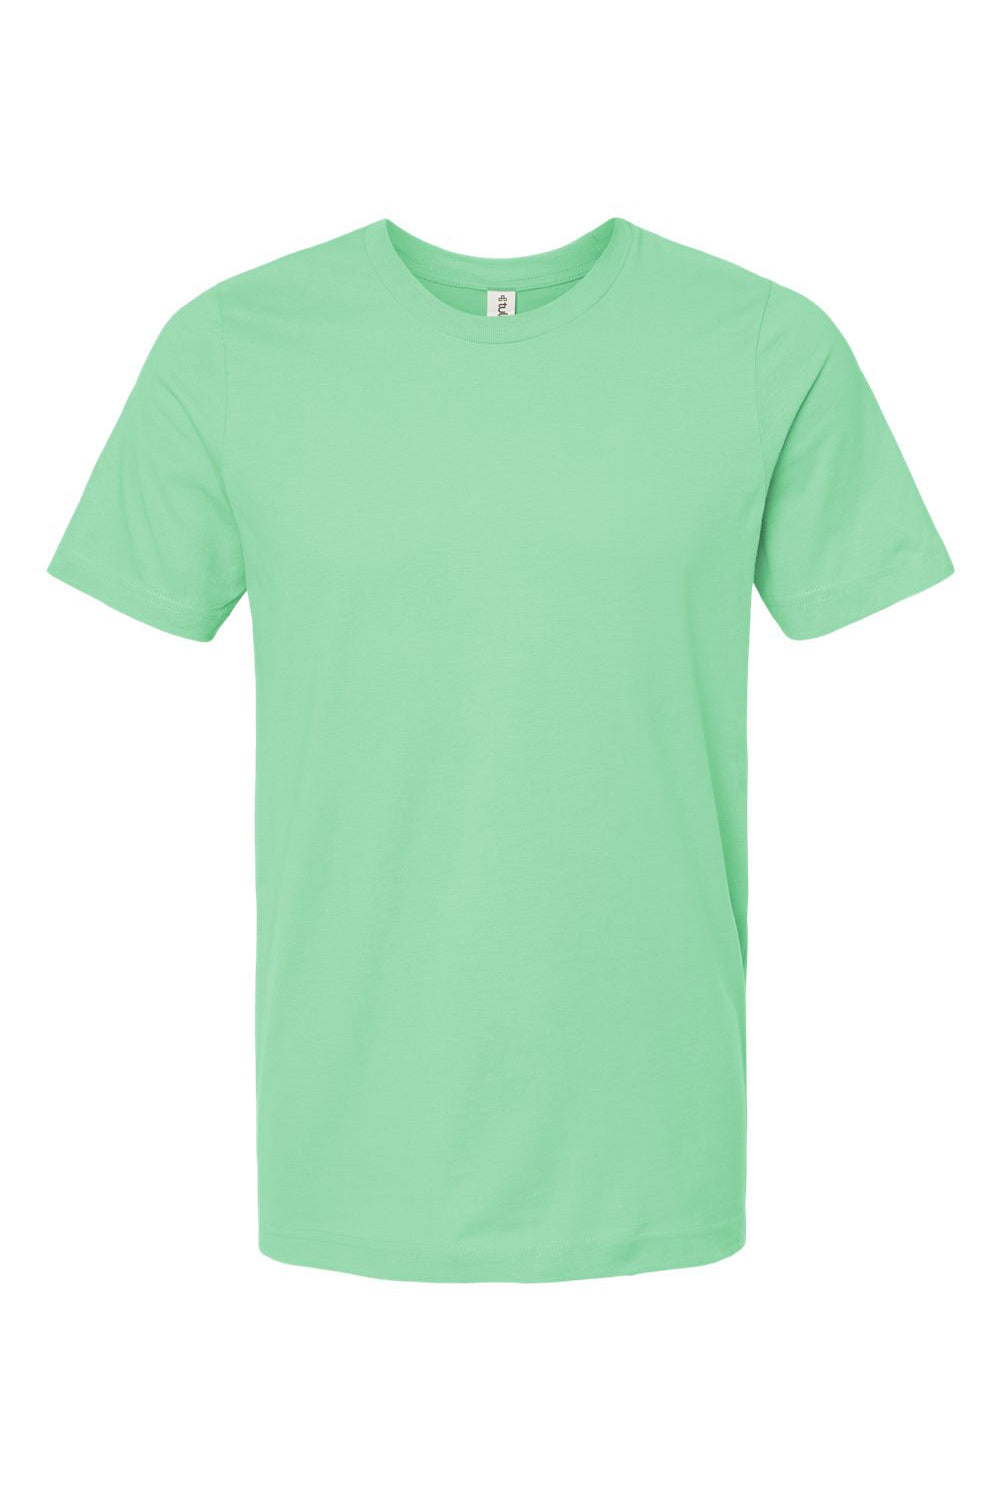 Tultex 602 Mens Short Sleeve Crewneck T-Shirt Light Mint Green Flat Front